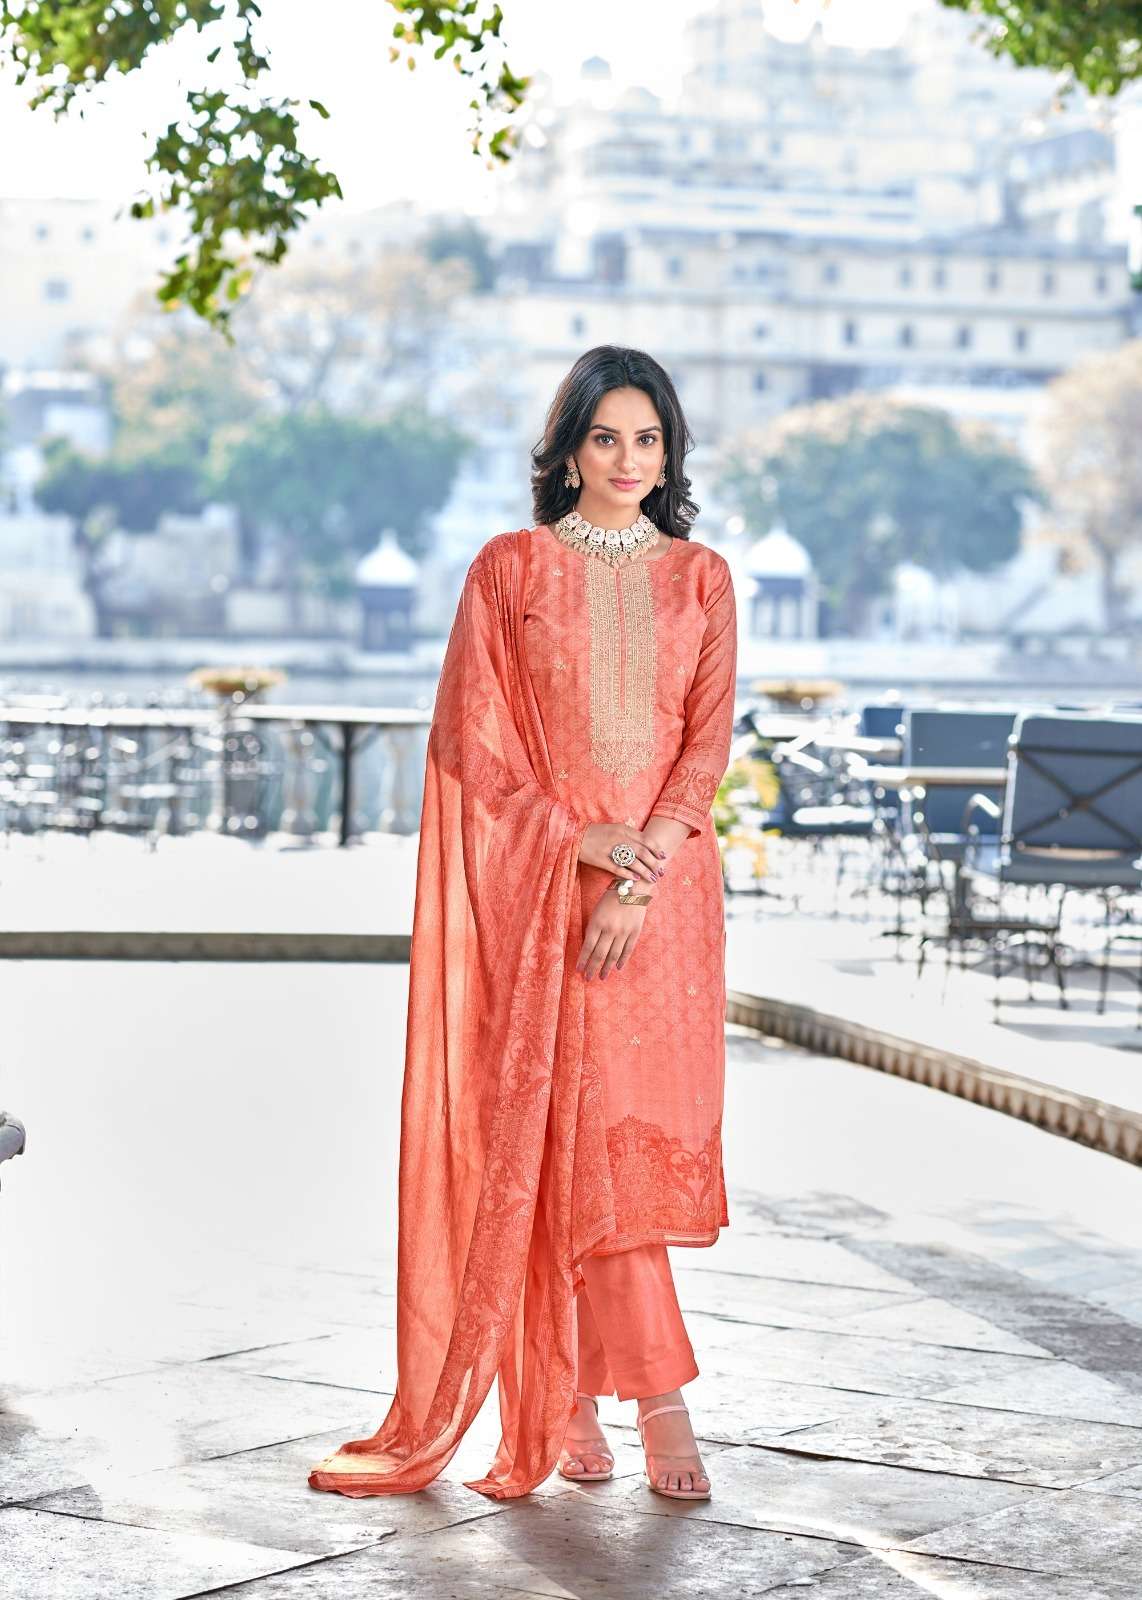 bela fashion tulua 4113-4119 series fancy designer salwar kameez catalogue wholesale price surat